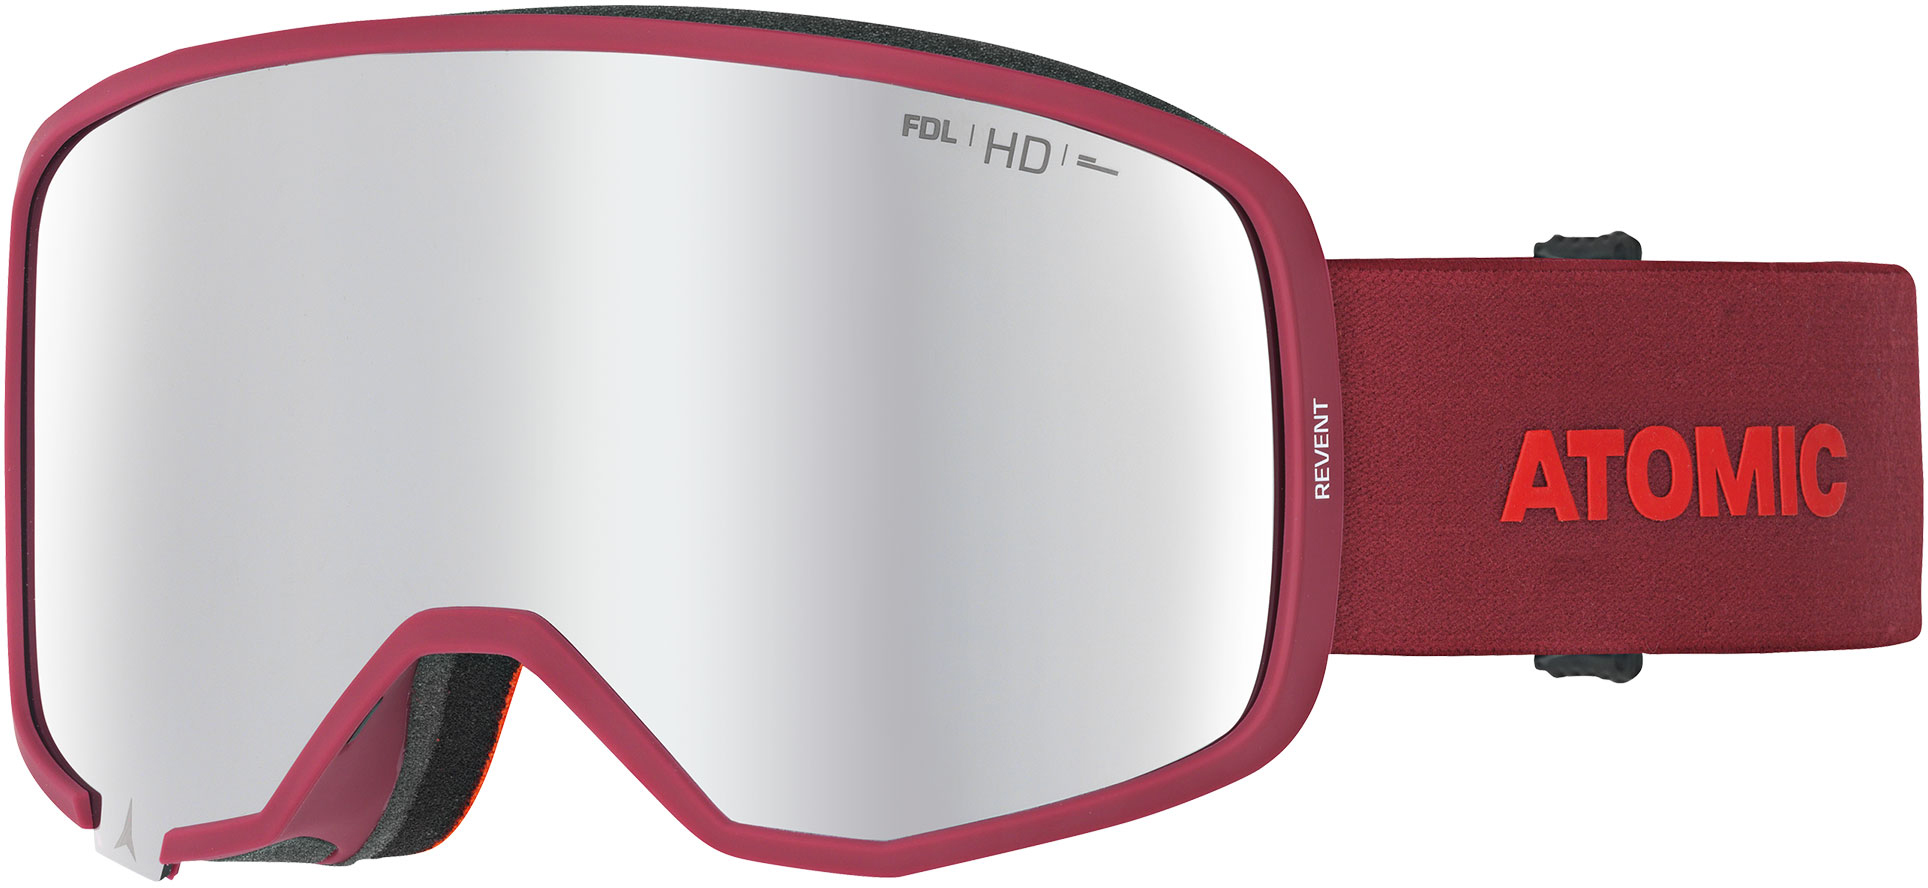 Atomic Revent HD Snowboard/Ski Goggles